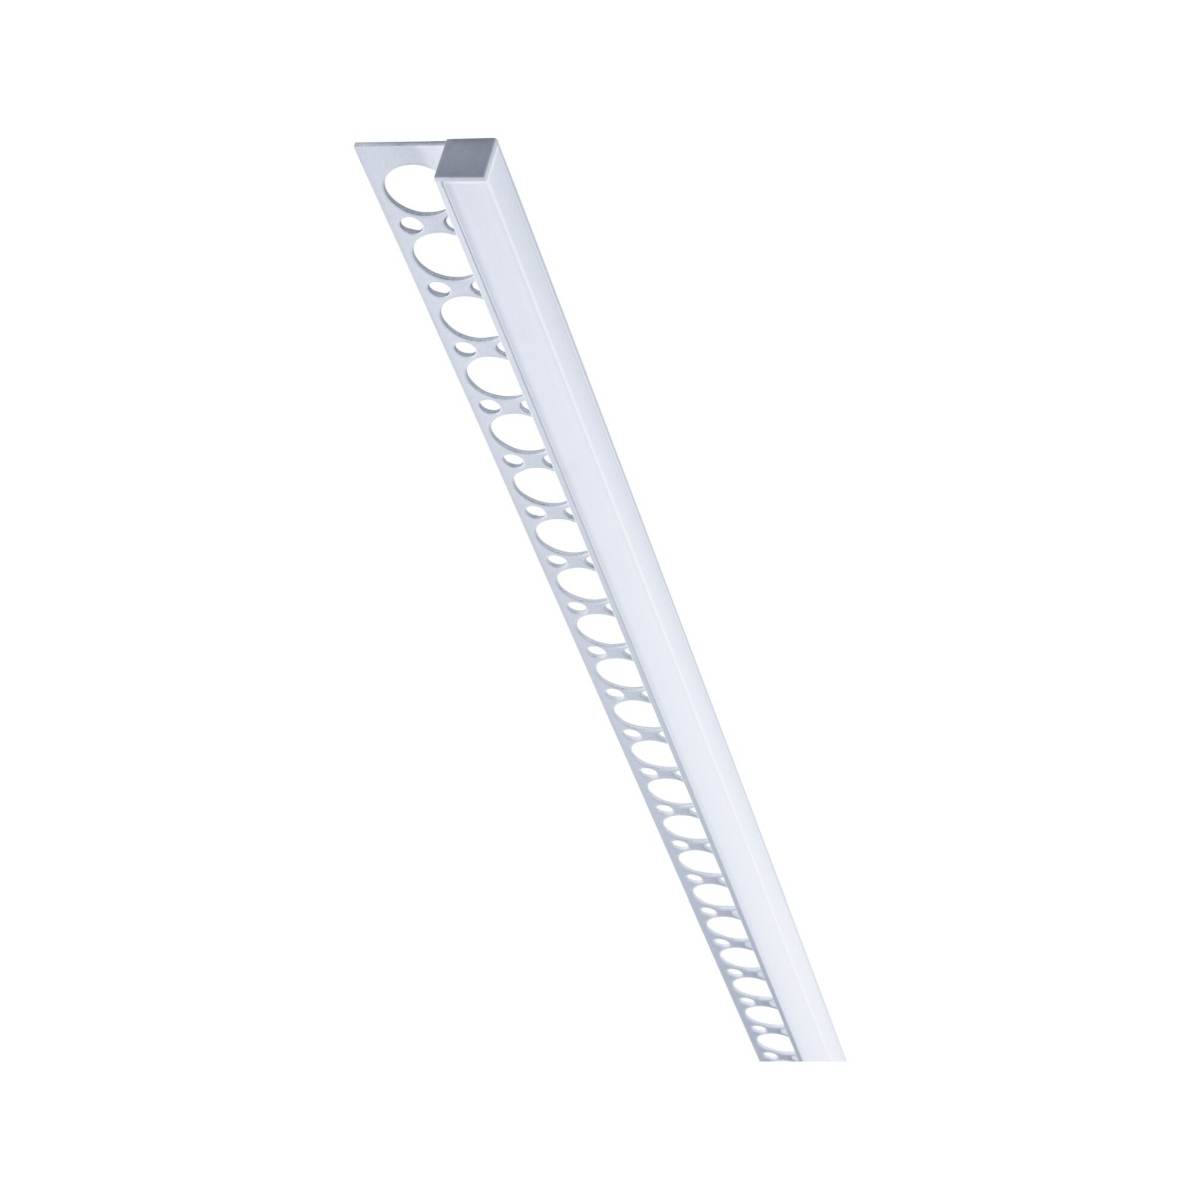 Paulmann LumiTiles LED Strip Frame Profil, 1 m oder 2 m, Aluminium,  Rahmenprofil, Einbauprofil